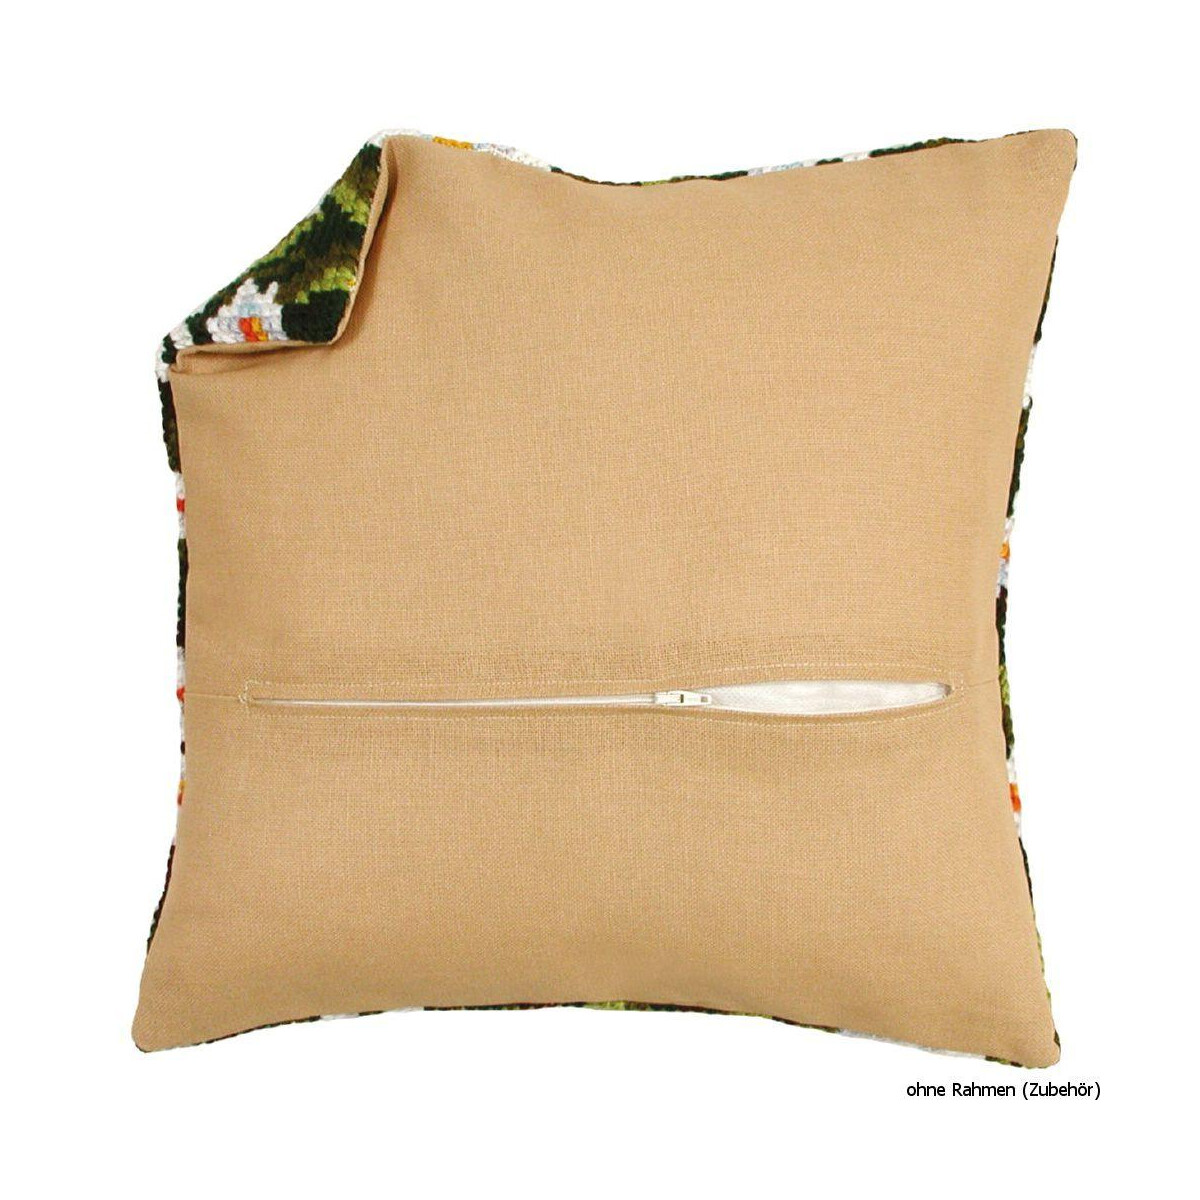 Vervaco cushion back with zipper 35 x 45 cm, beige, DIY